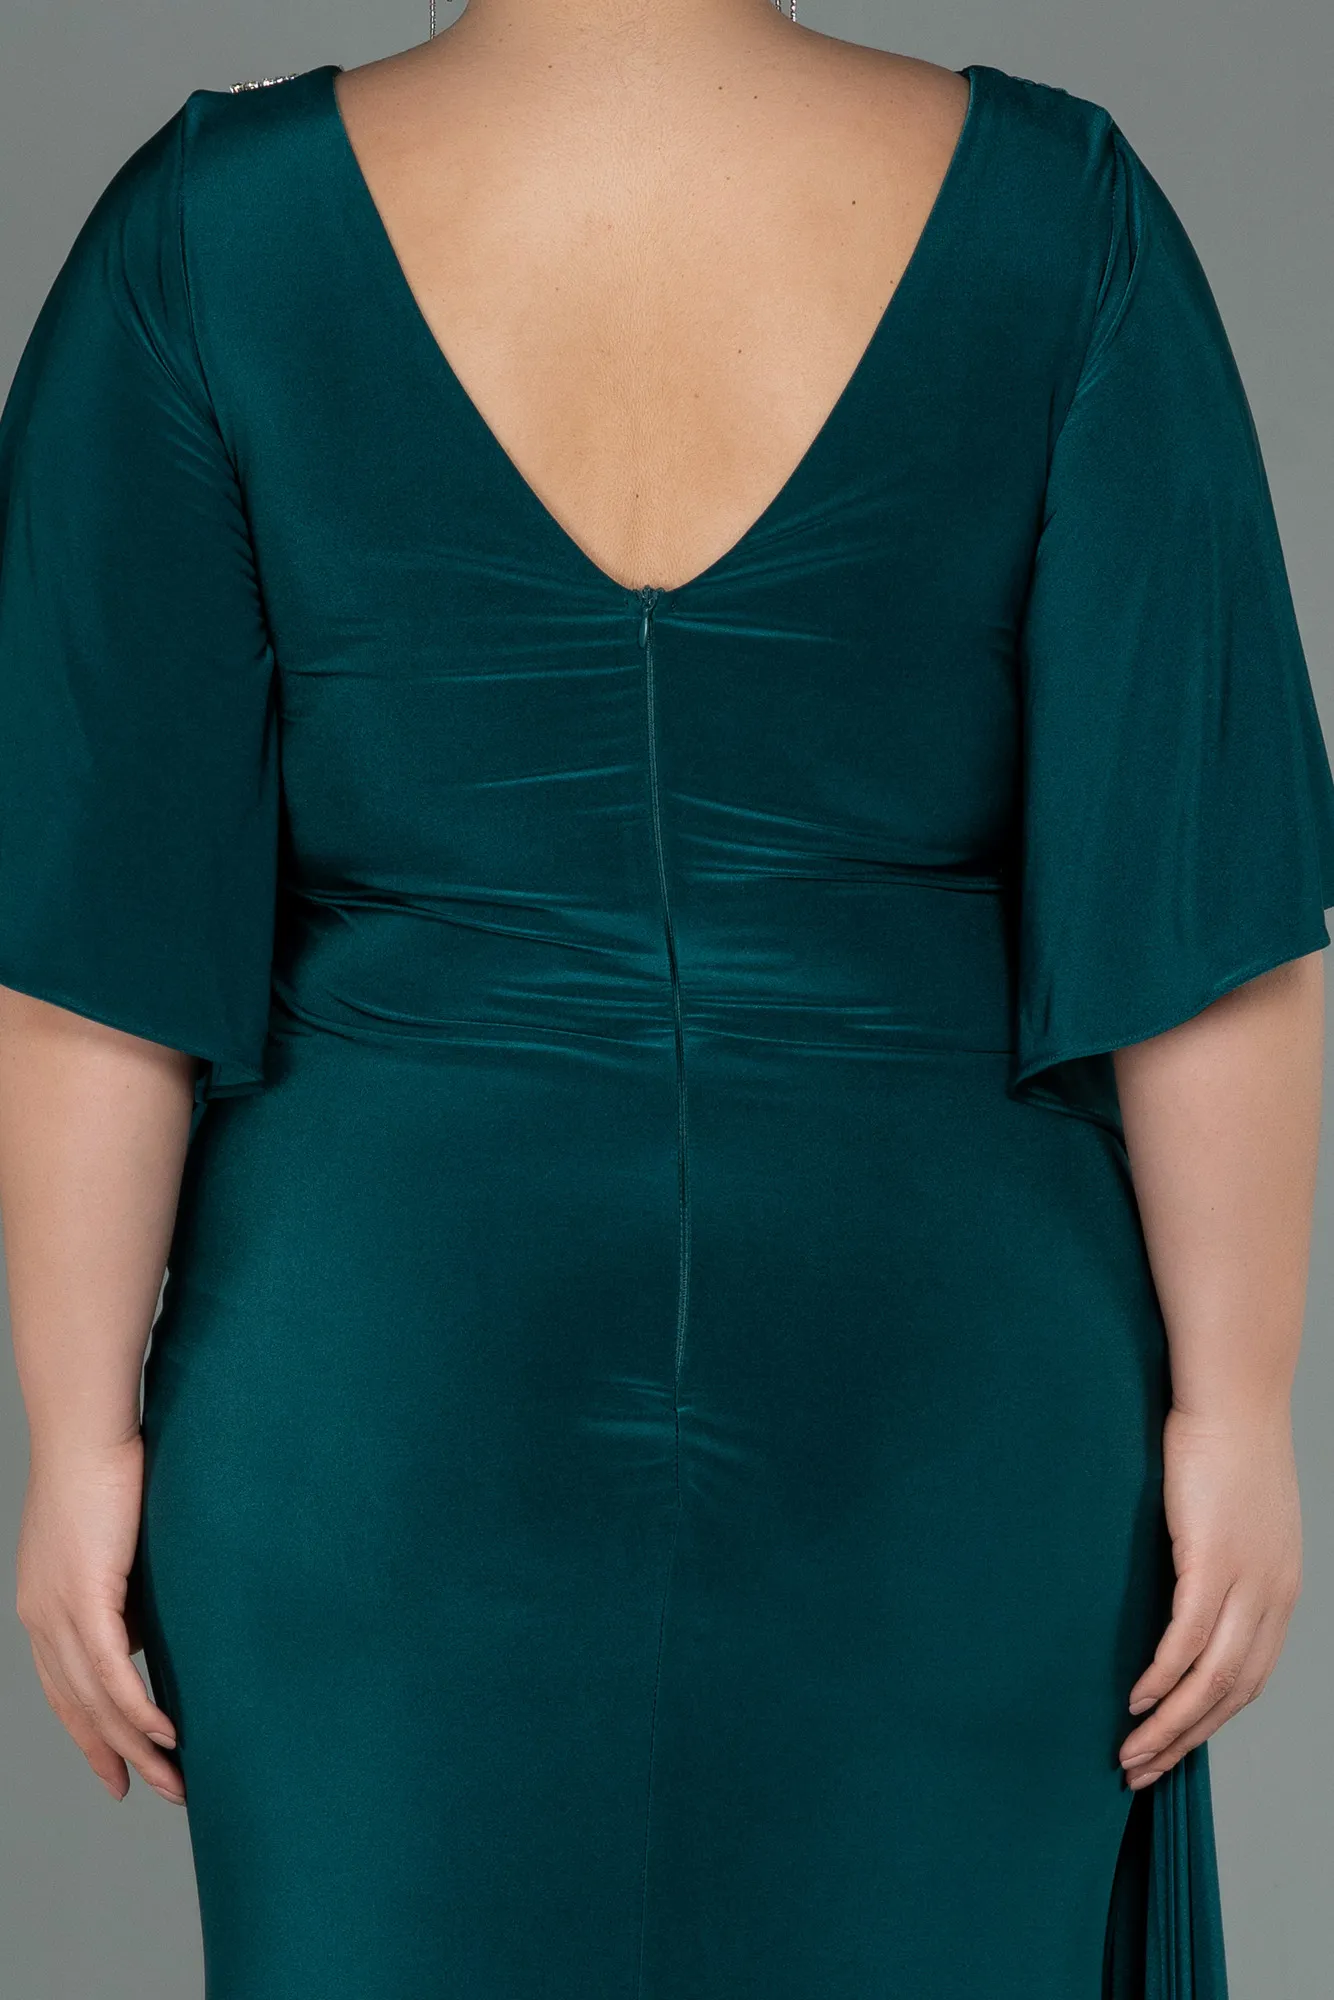 Emerald Green-Long Plus Size Evening Dress ABU3173